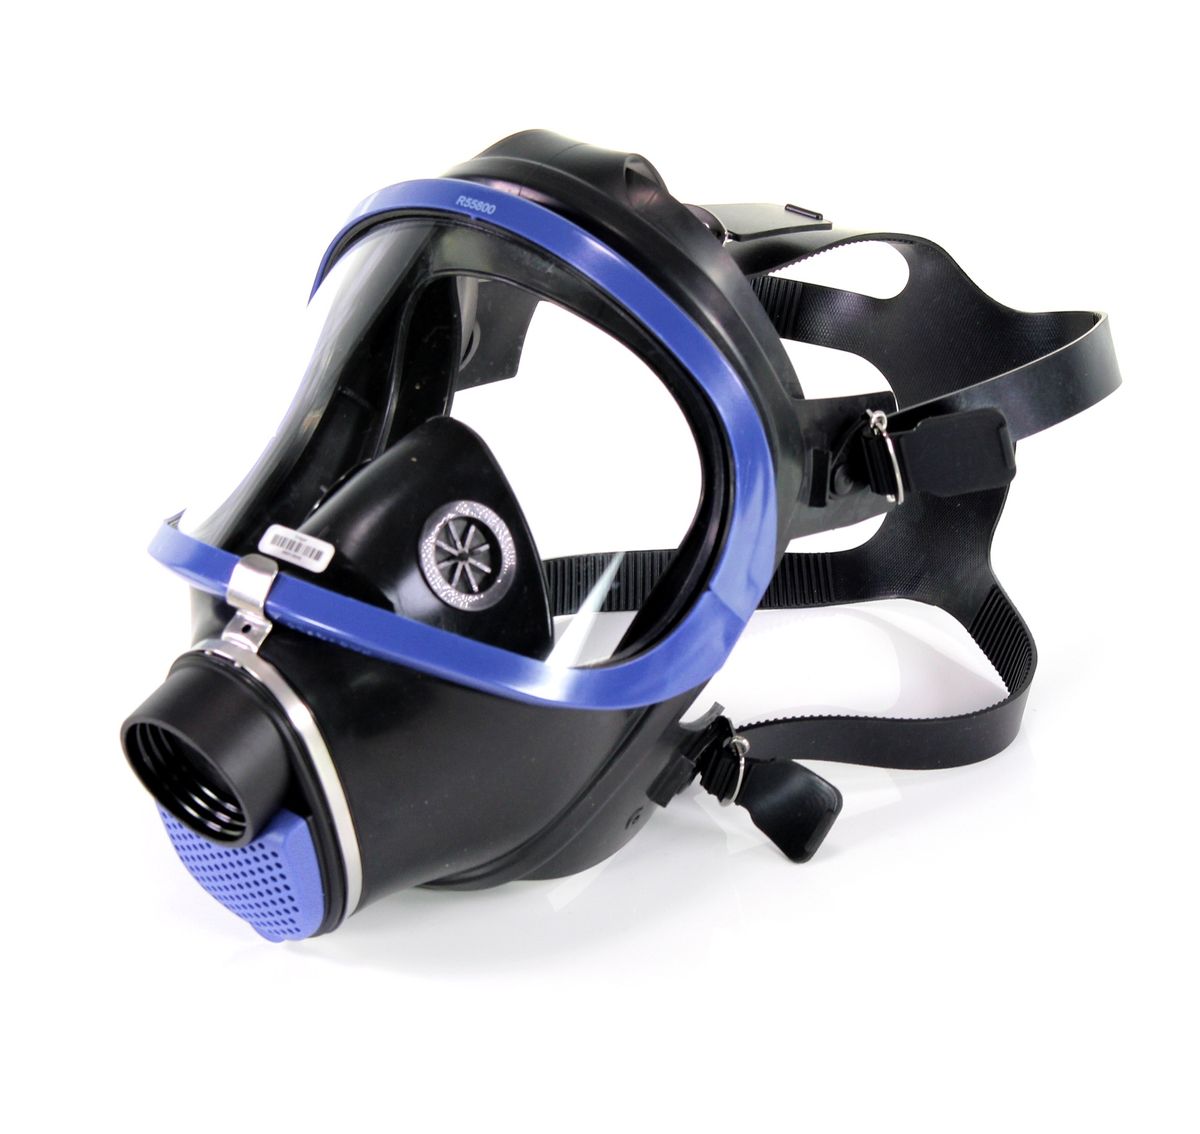 Dräger X-plore 6300 Atemschutzvollmaske aus Plexiglas ( R55800 )  EN 148-1 / EN 136 Klasse 2